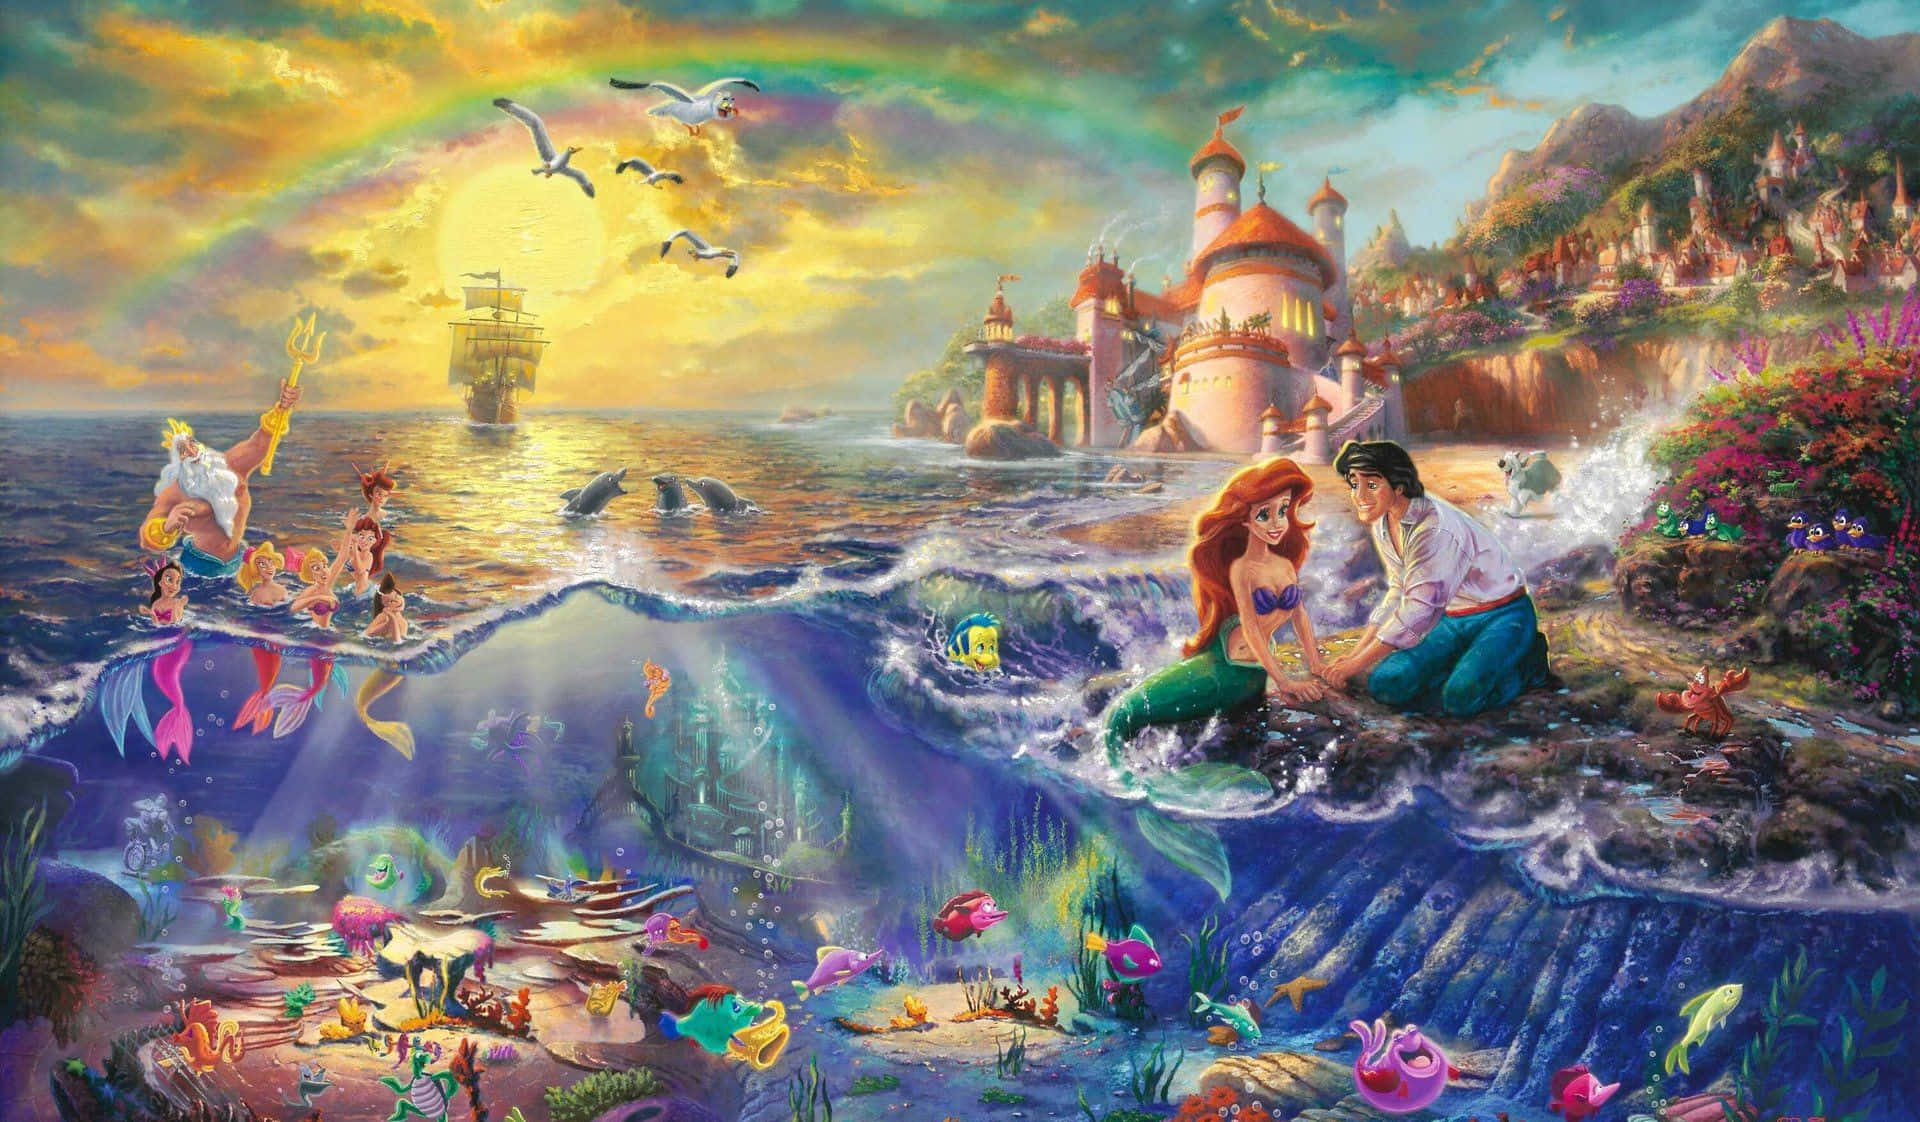 Ariel fra Disney's The Little Mermaid rider en lilla søhest foran en skinnende gul sol. Wallpaper